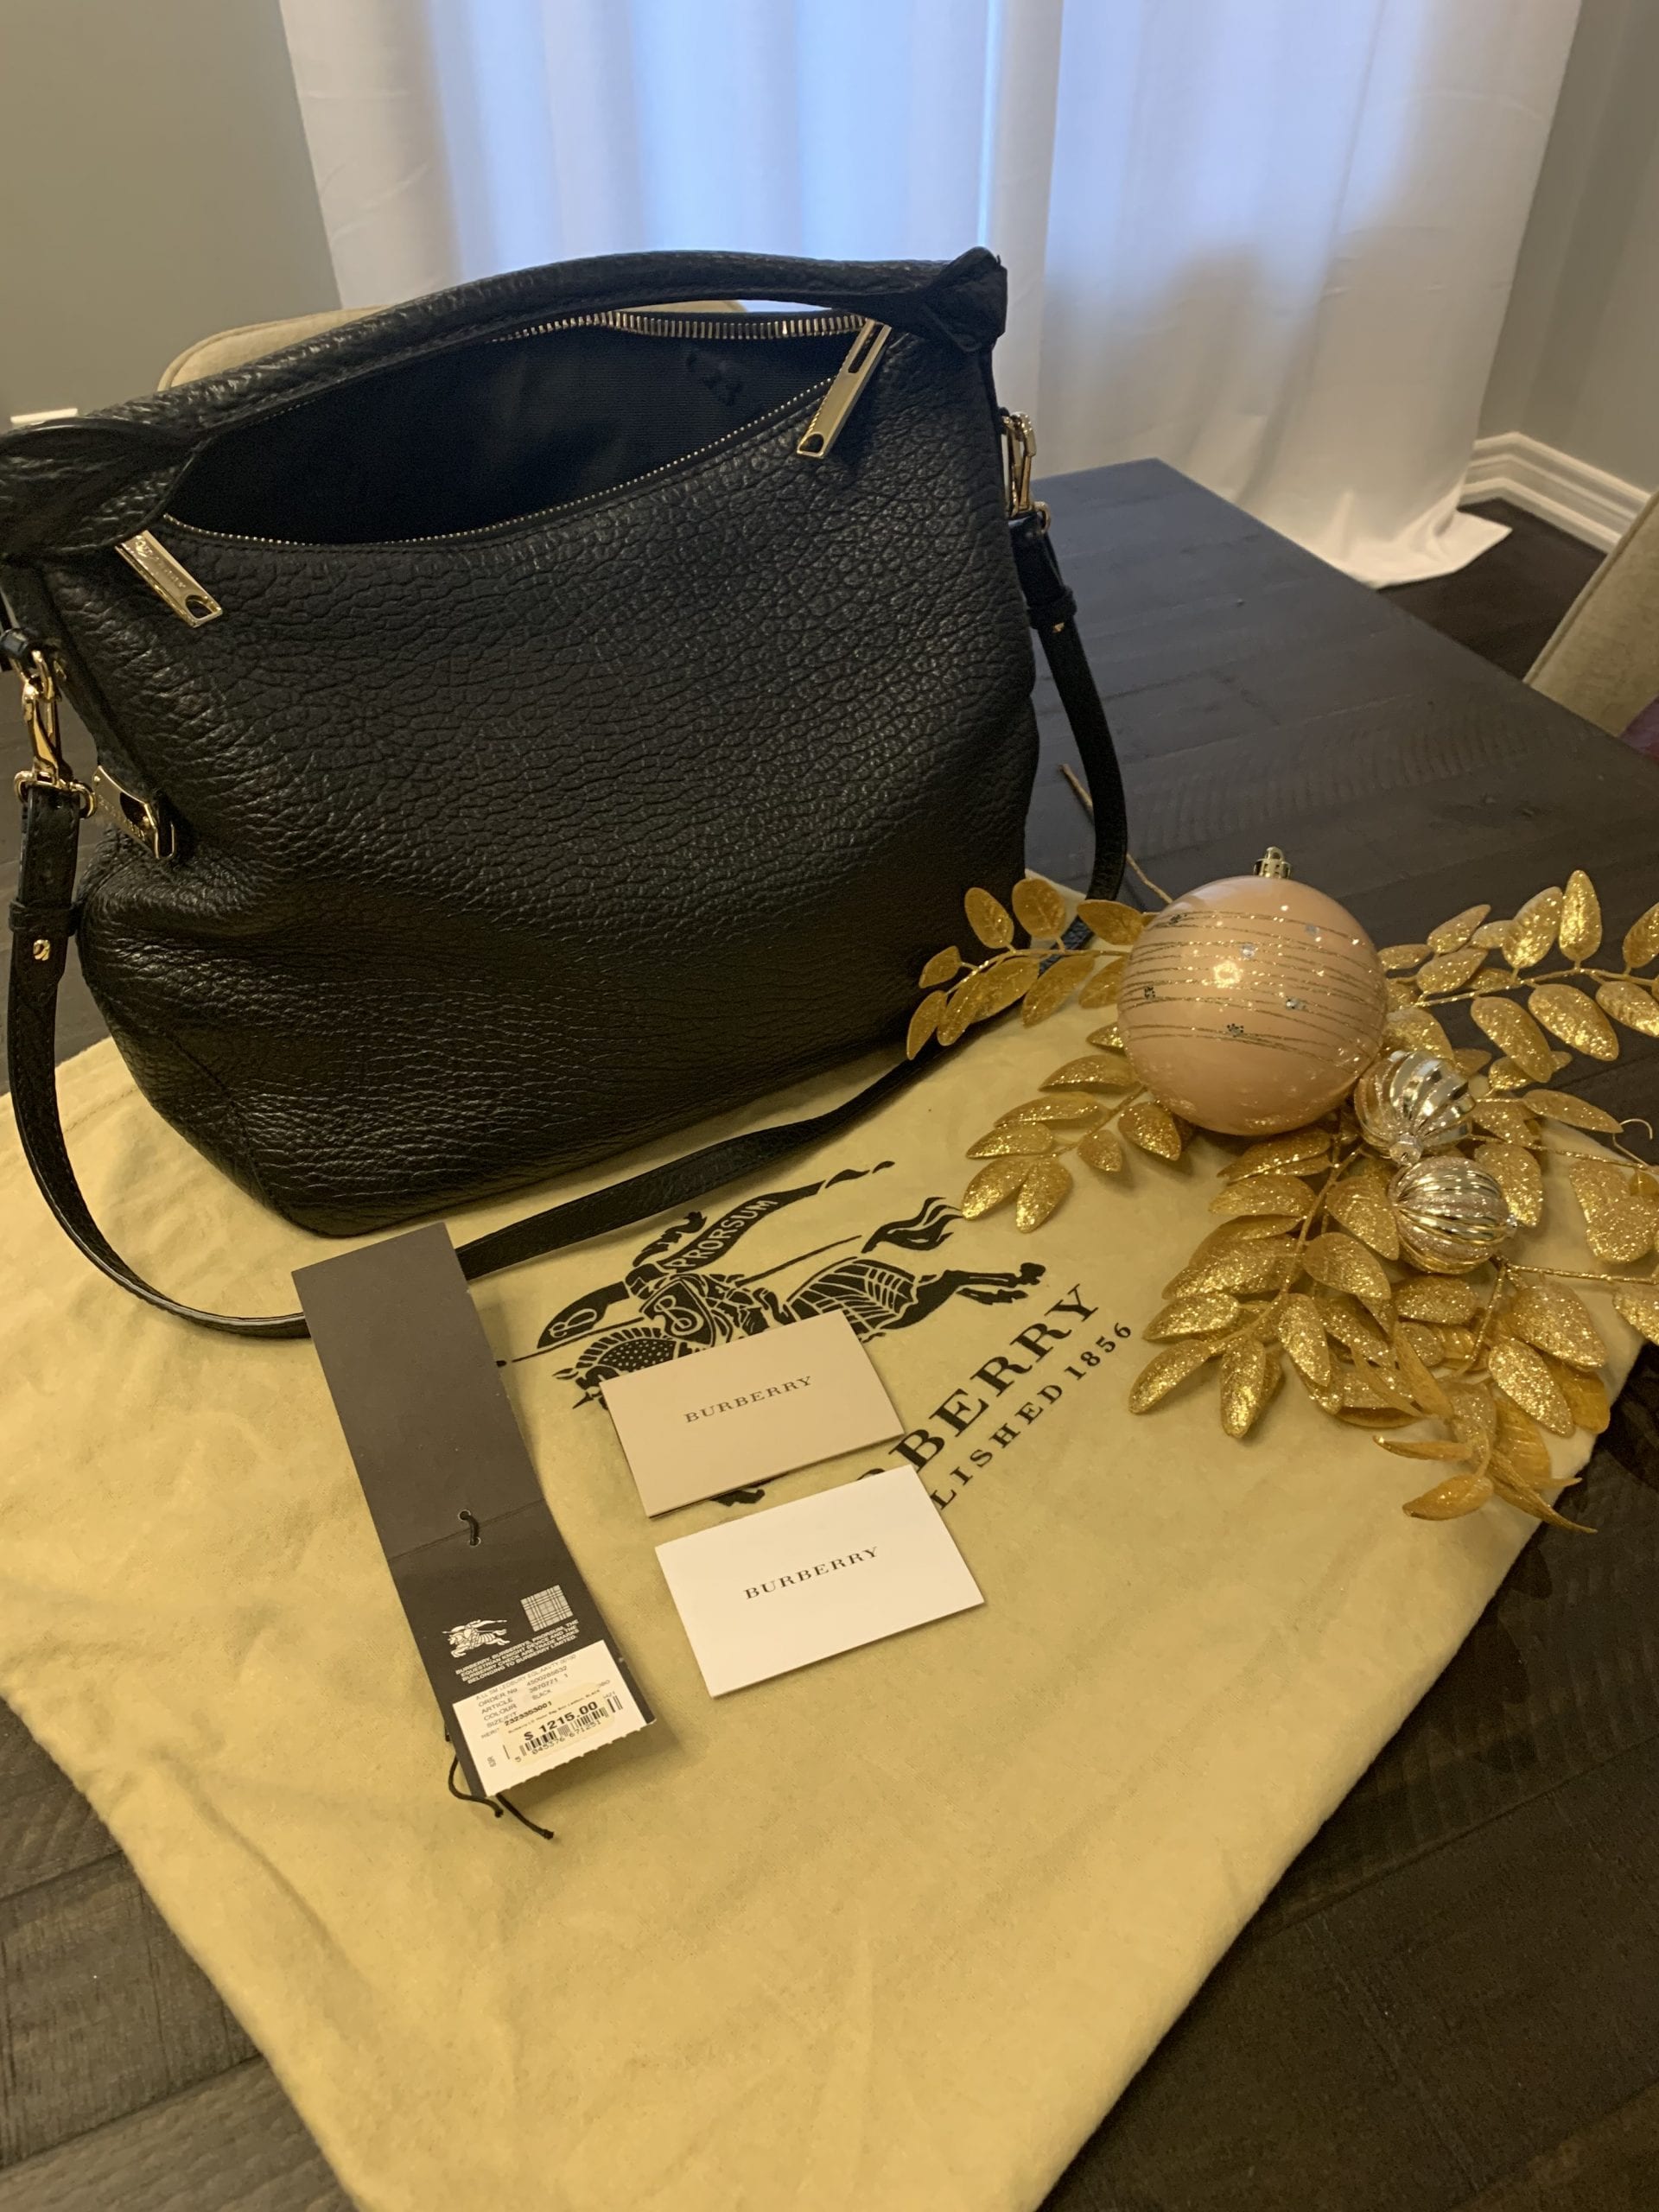 Burberry Black Hobo Handbag - Value $1215 - Global Strides Charity